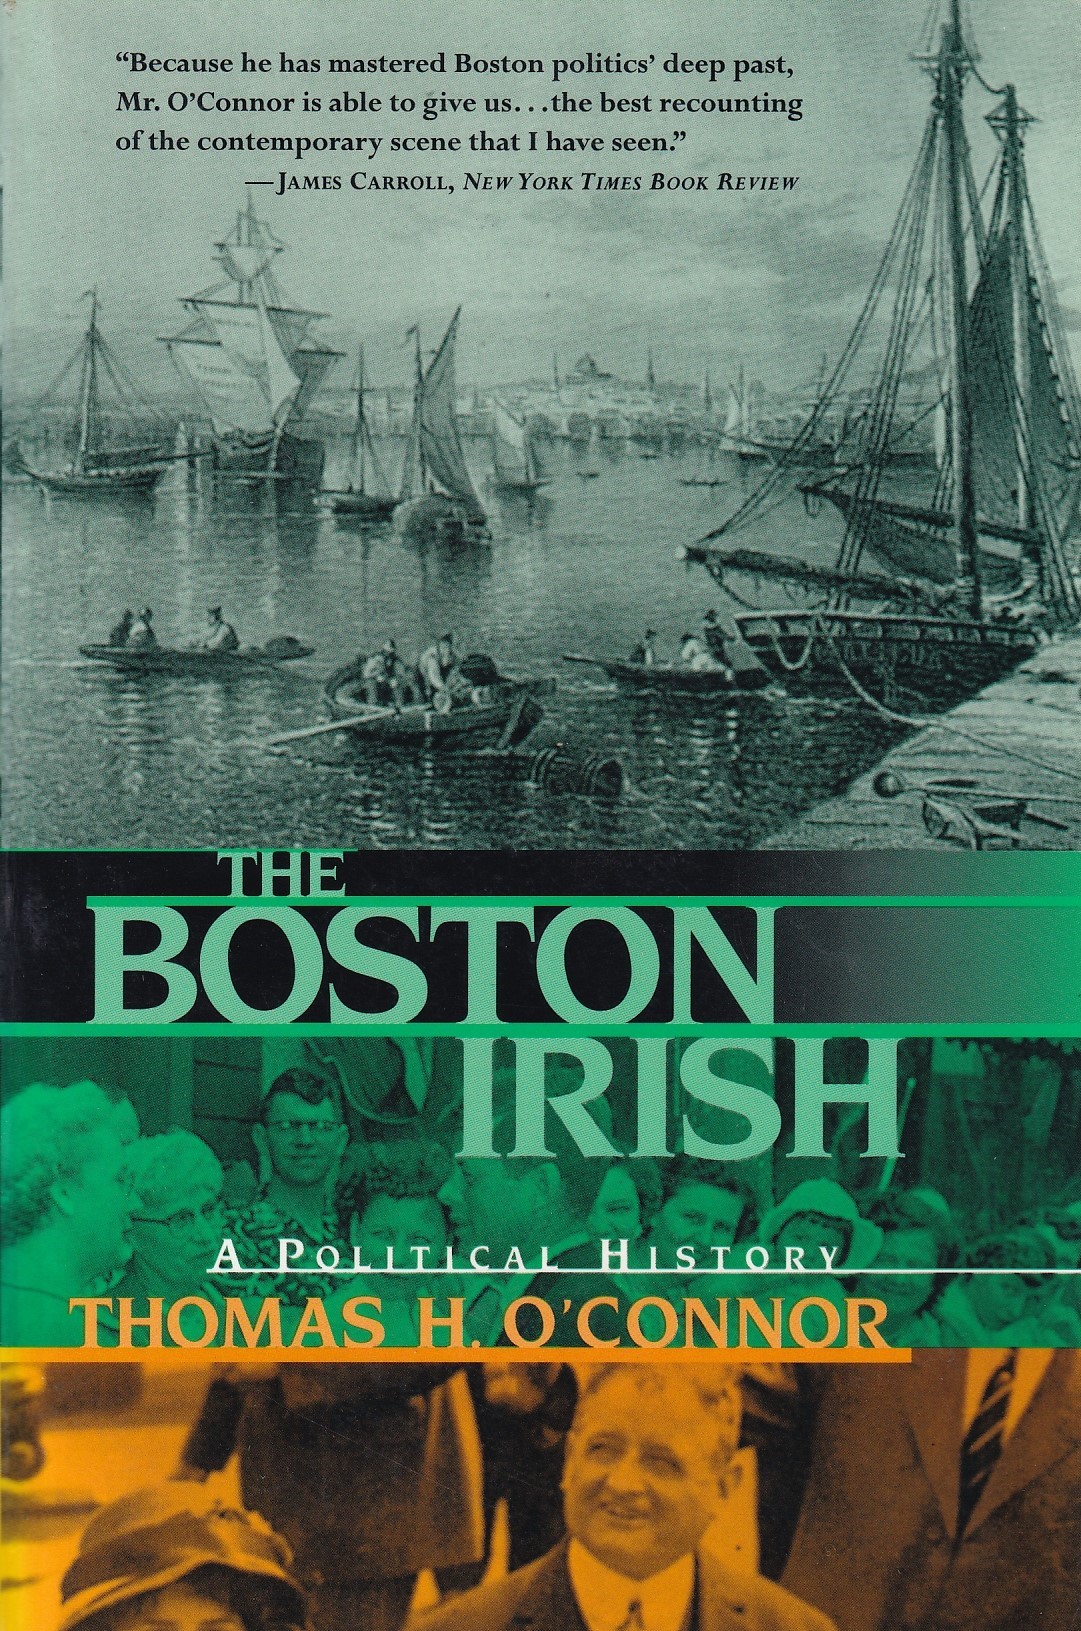 The Boston Irish: A Political History by Thomas H. O'Connor